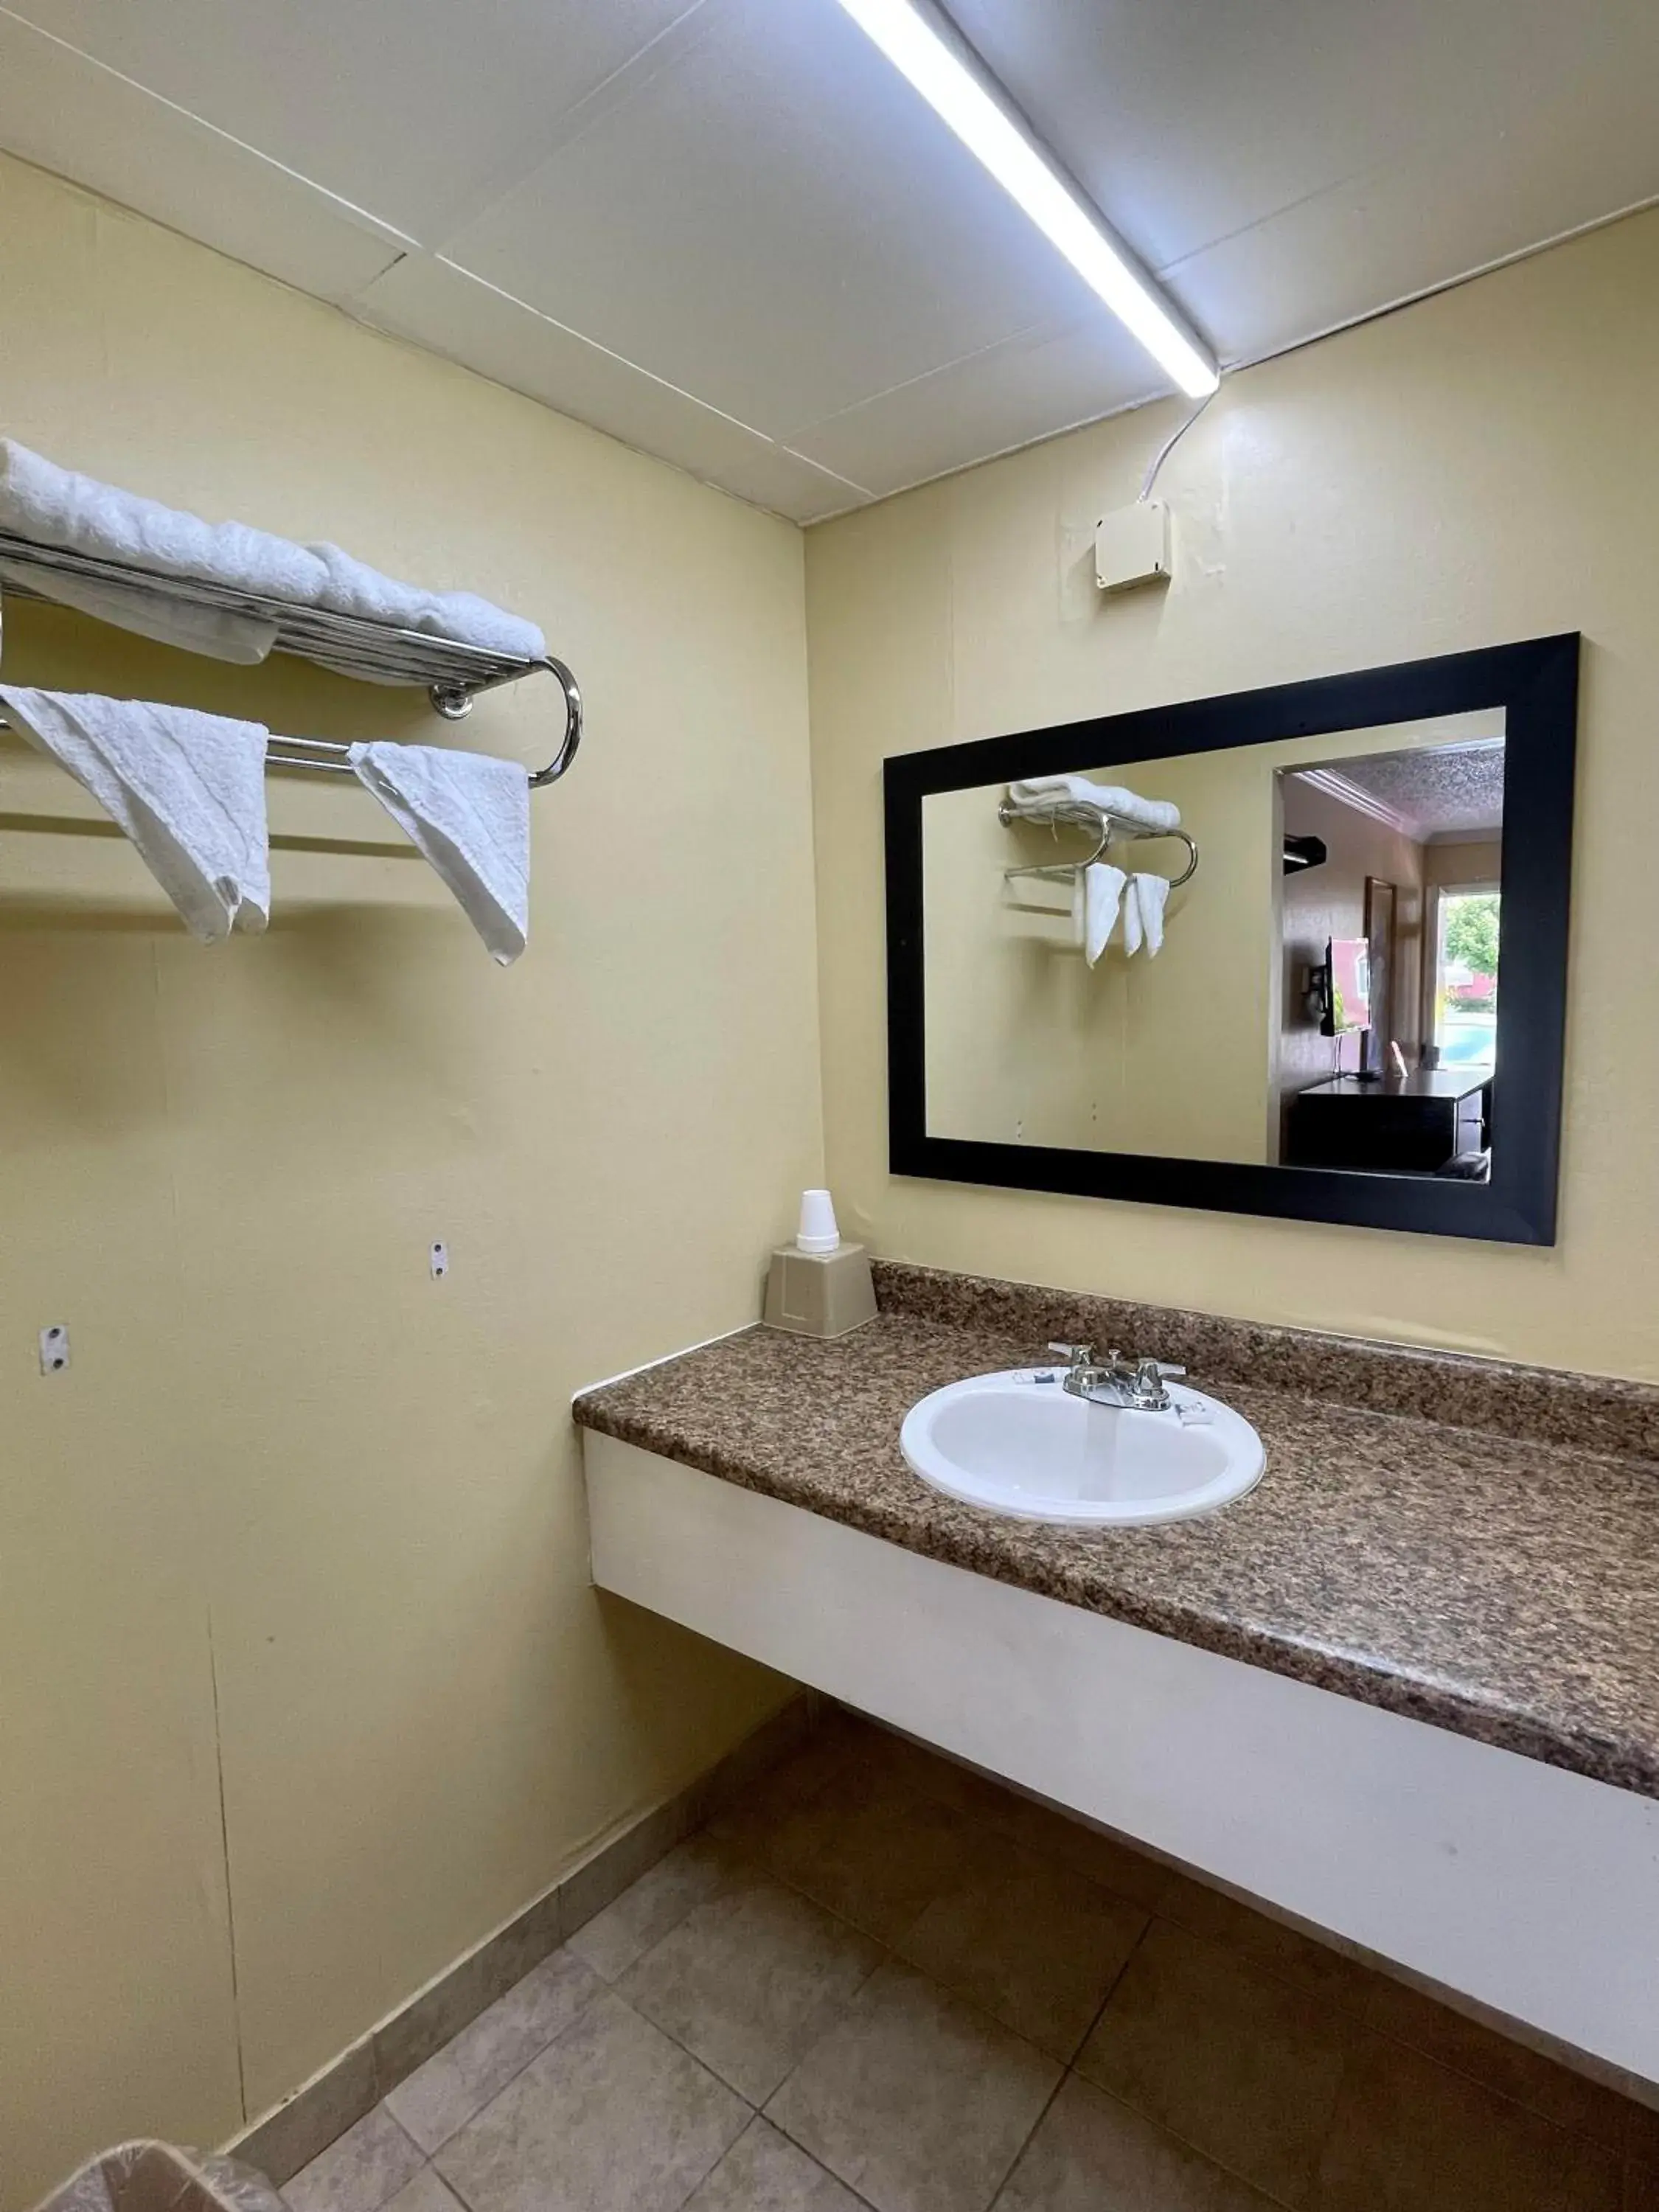 Bathroom in Economy Motel